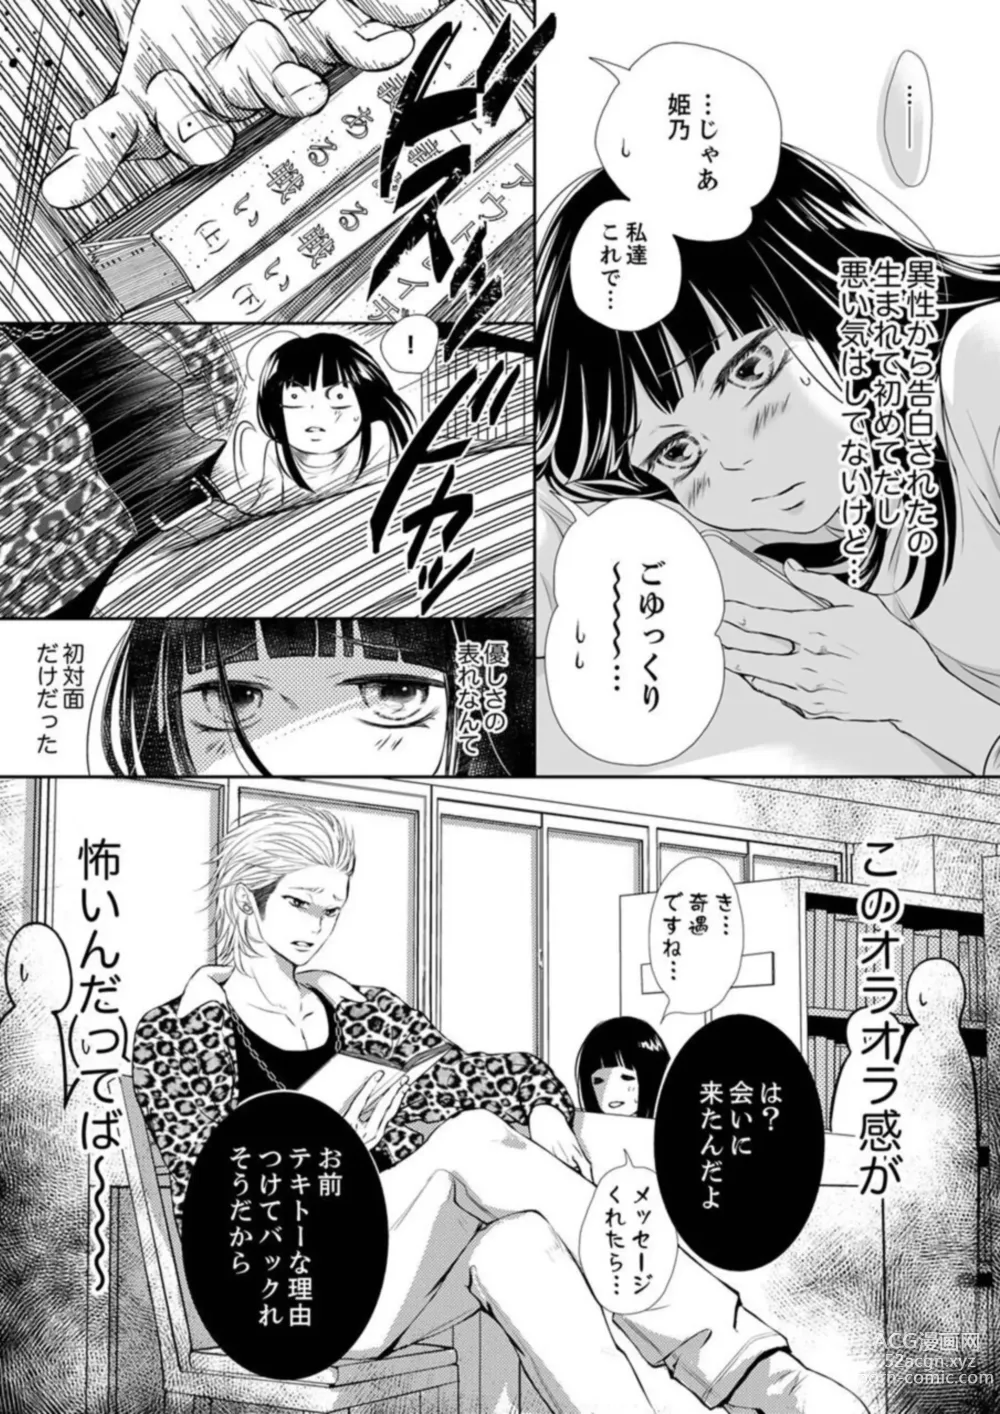 Page 9 of manga Juusei to Aegigoe ~ Uchinuku Tabi ni, Kikasero yo - Gun shot and Panting 1